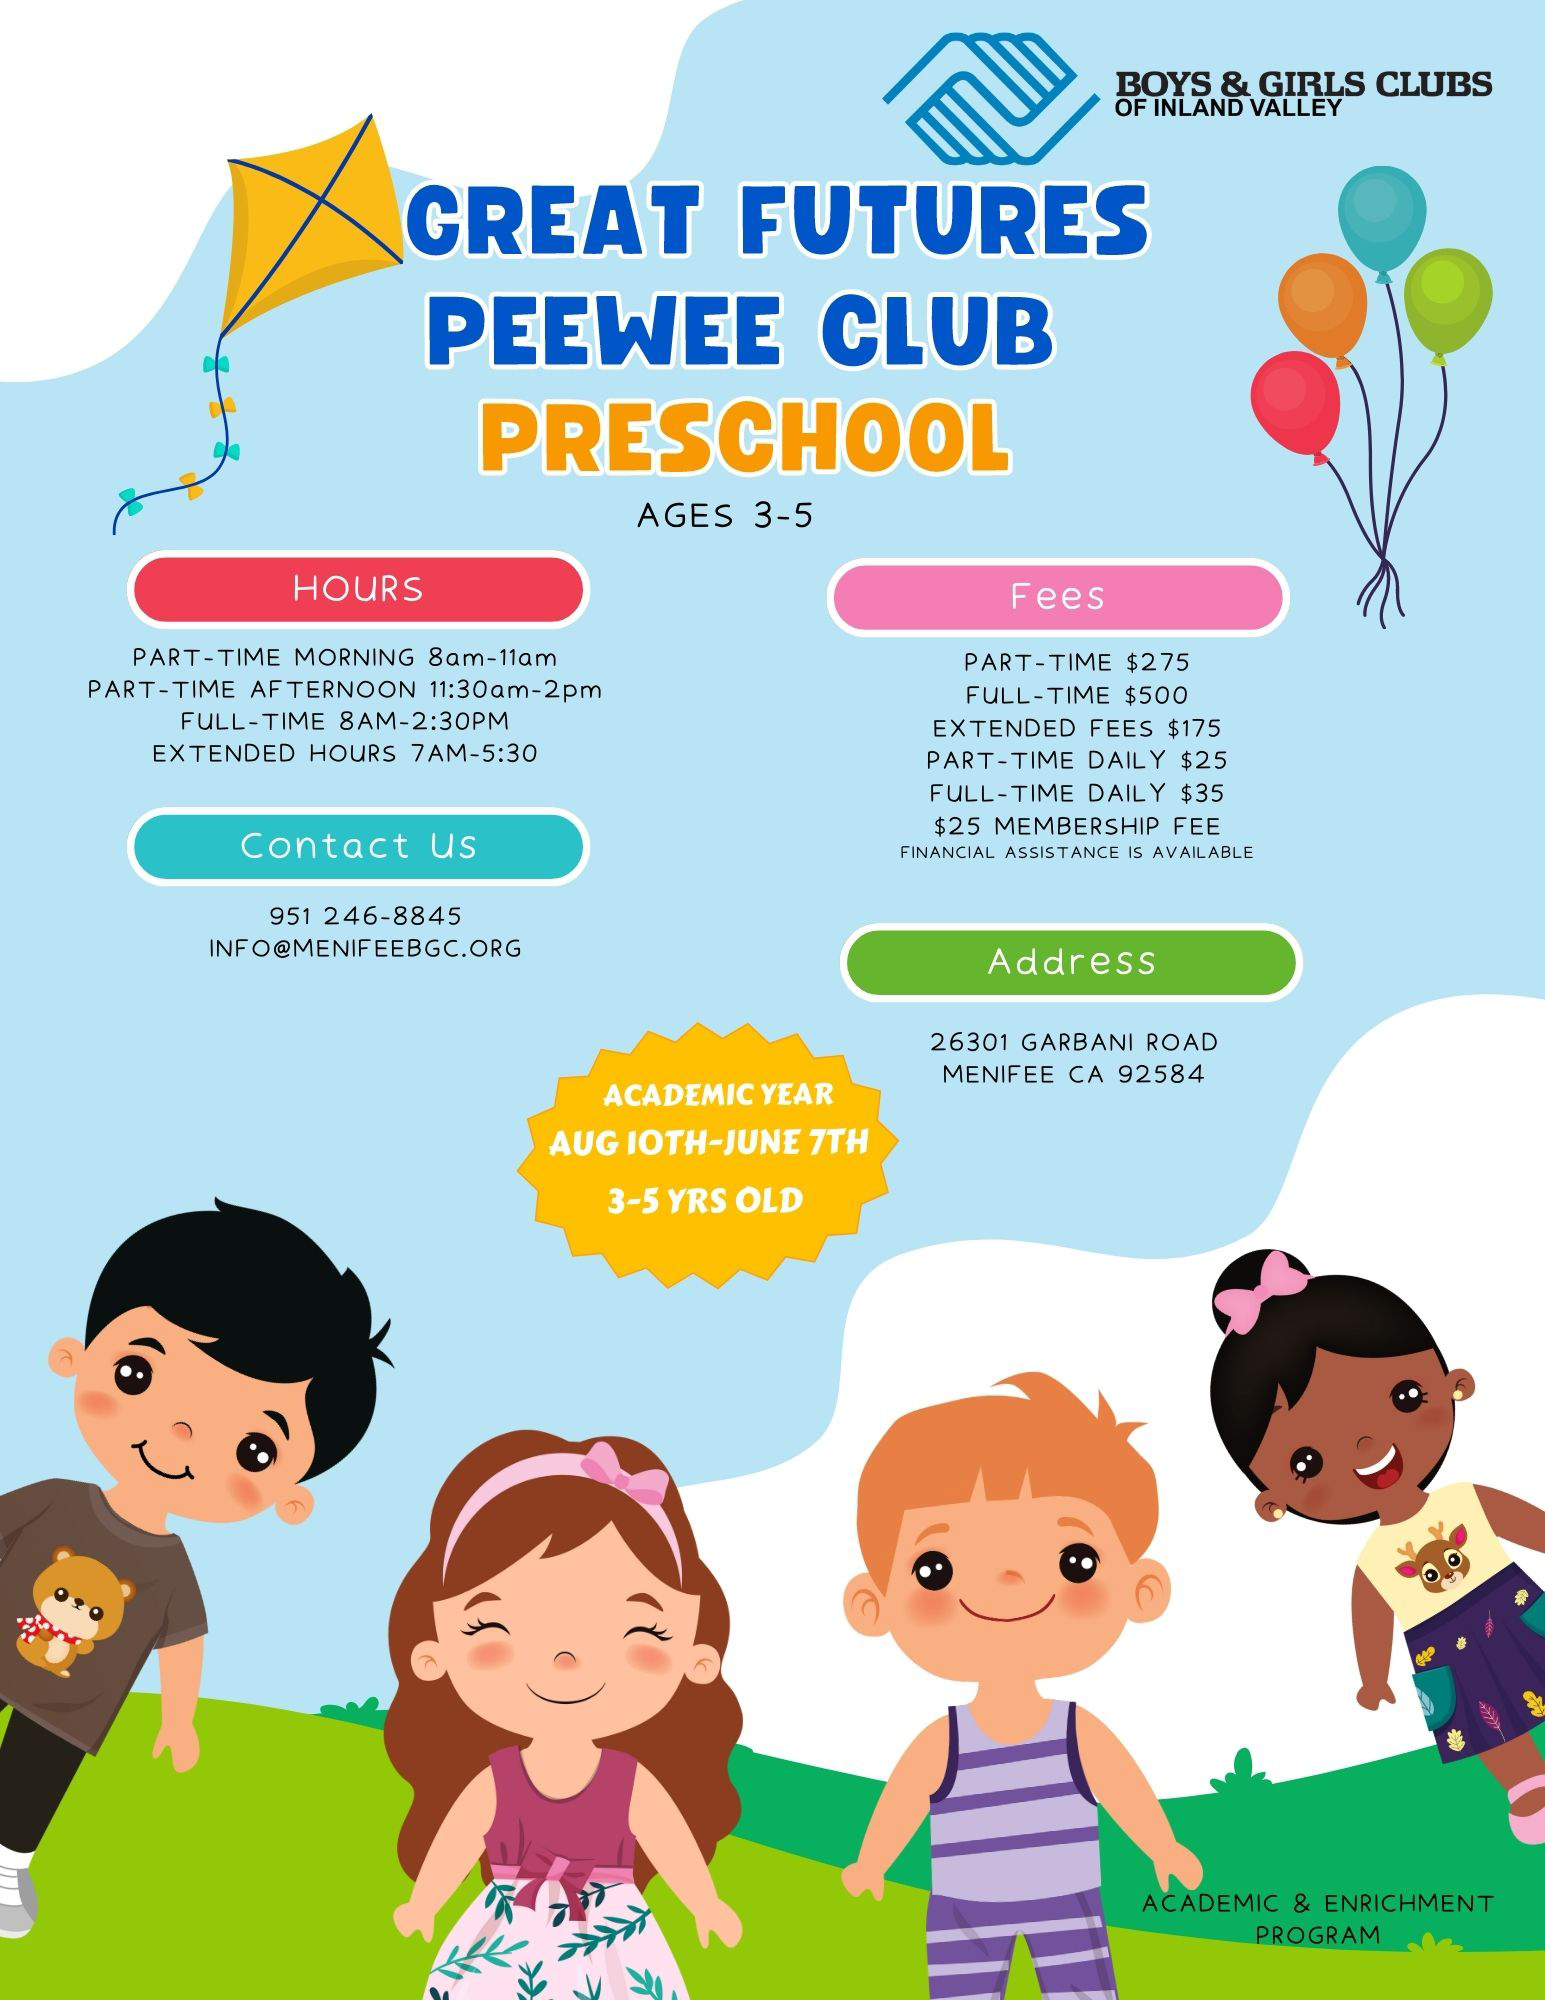 Registration open for Great Futures Preschool program Menifee 24/7